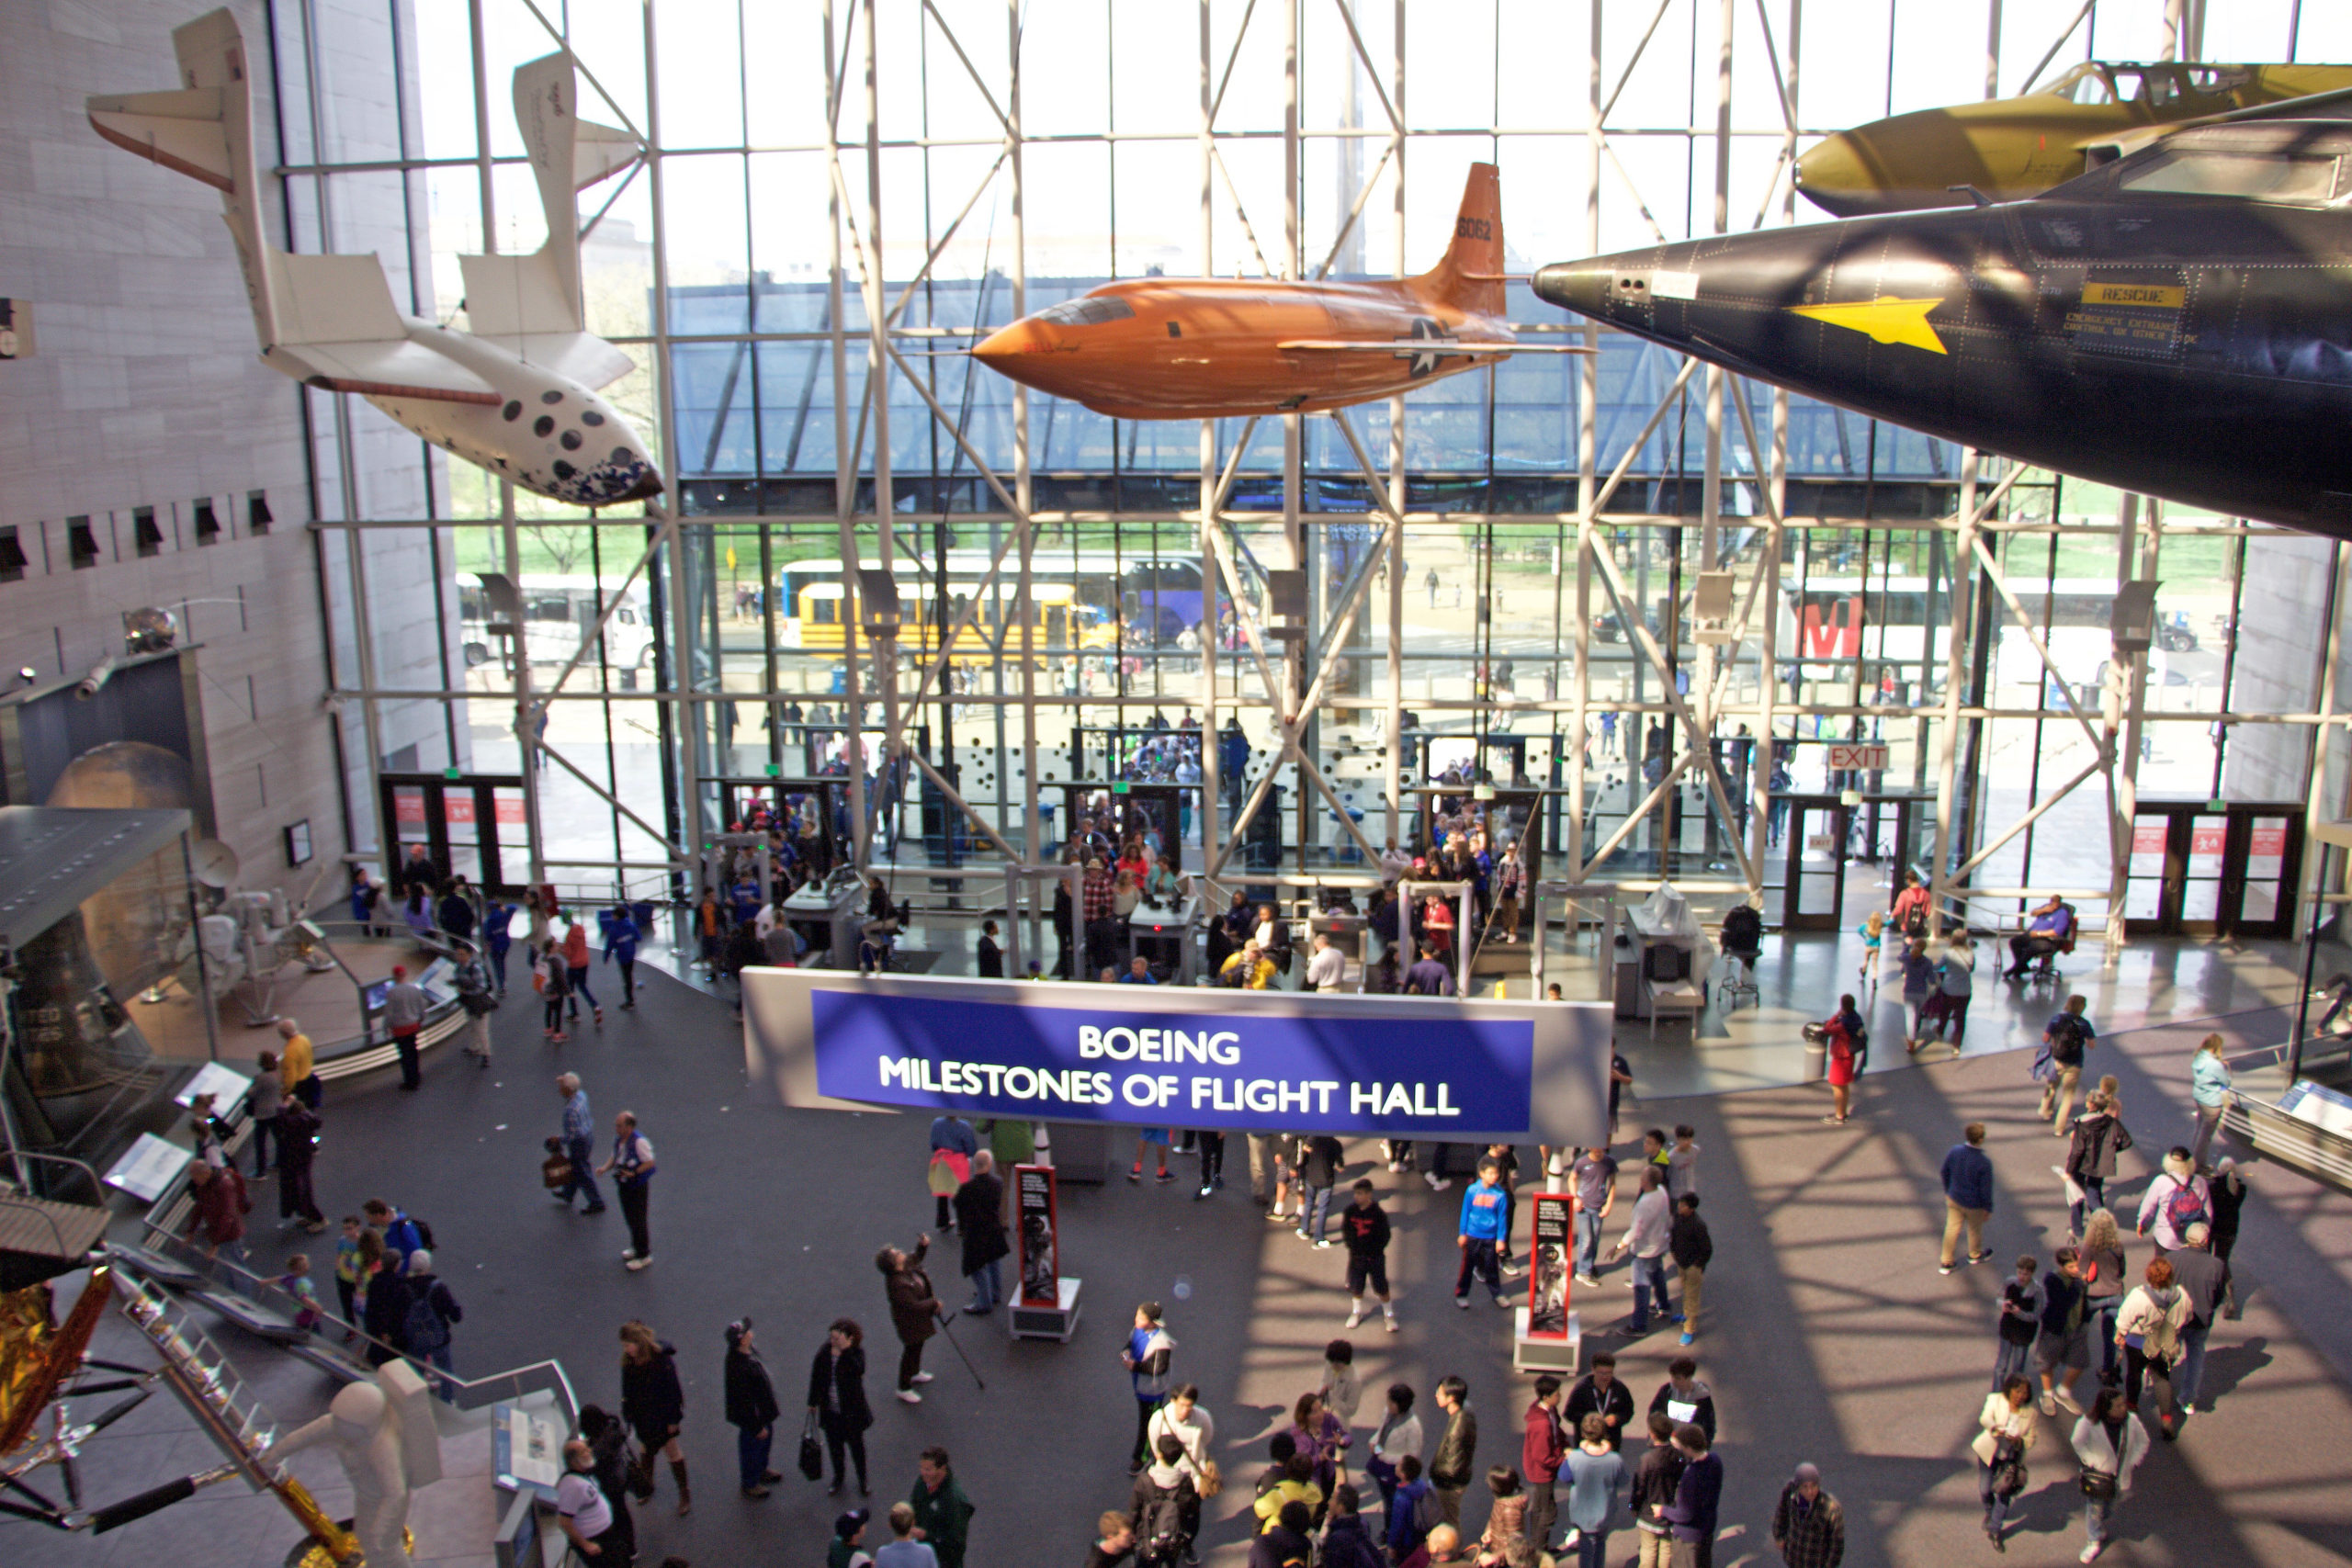 Air & Space Museum - Boeing Milestones of Flight Hall courtesy of washington.org